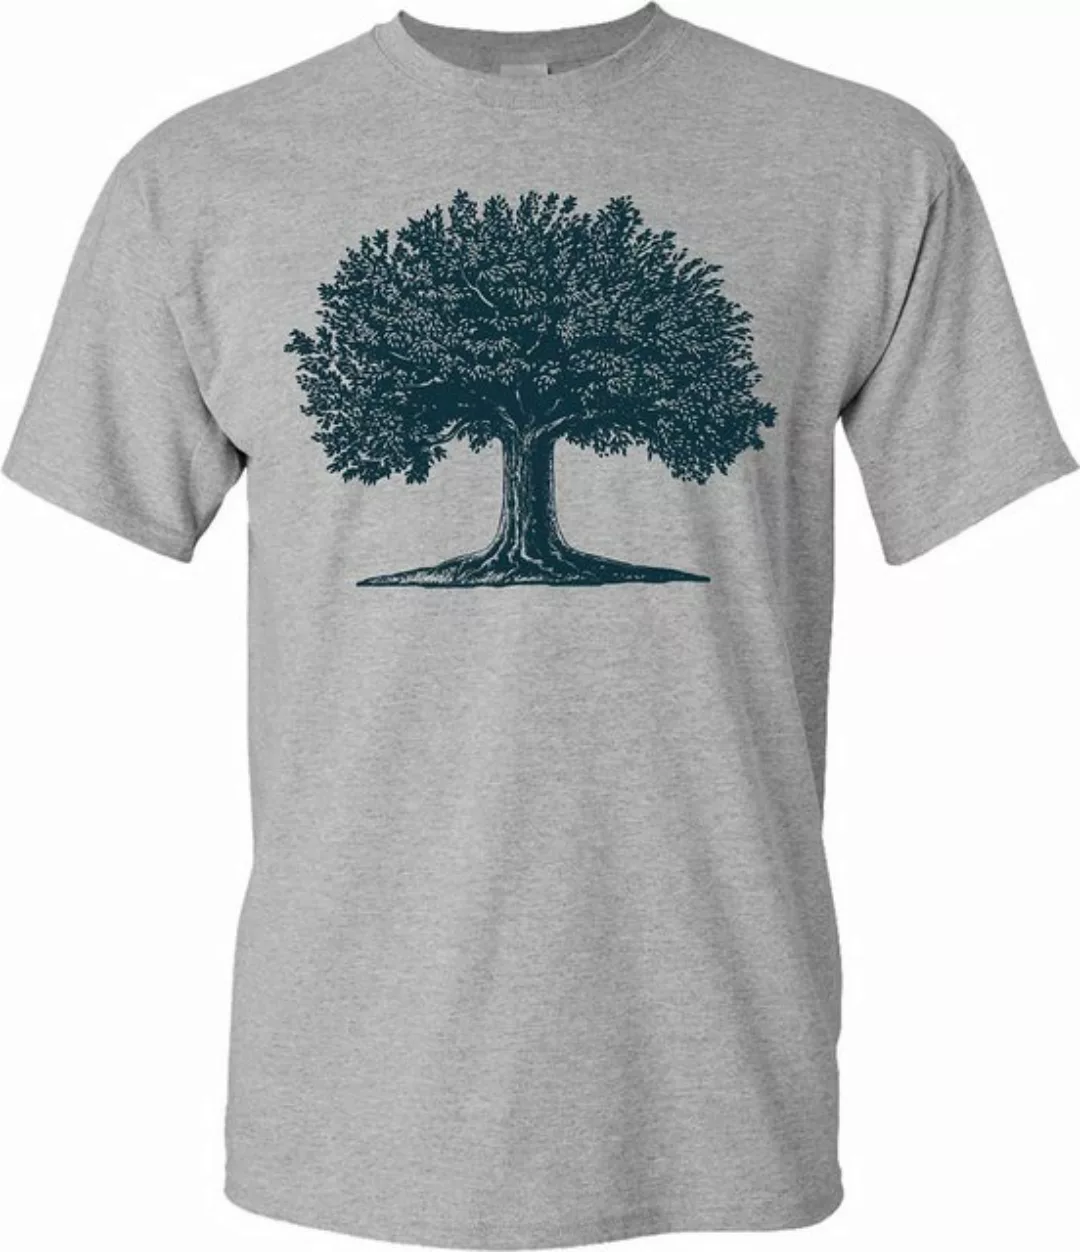 Baddery Print-Shirt Garten T-Shirt : "Arbor Magna" - Wald - Nature Hobbygär günstig online kaufen